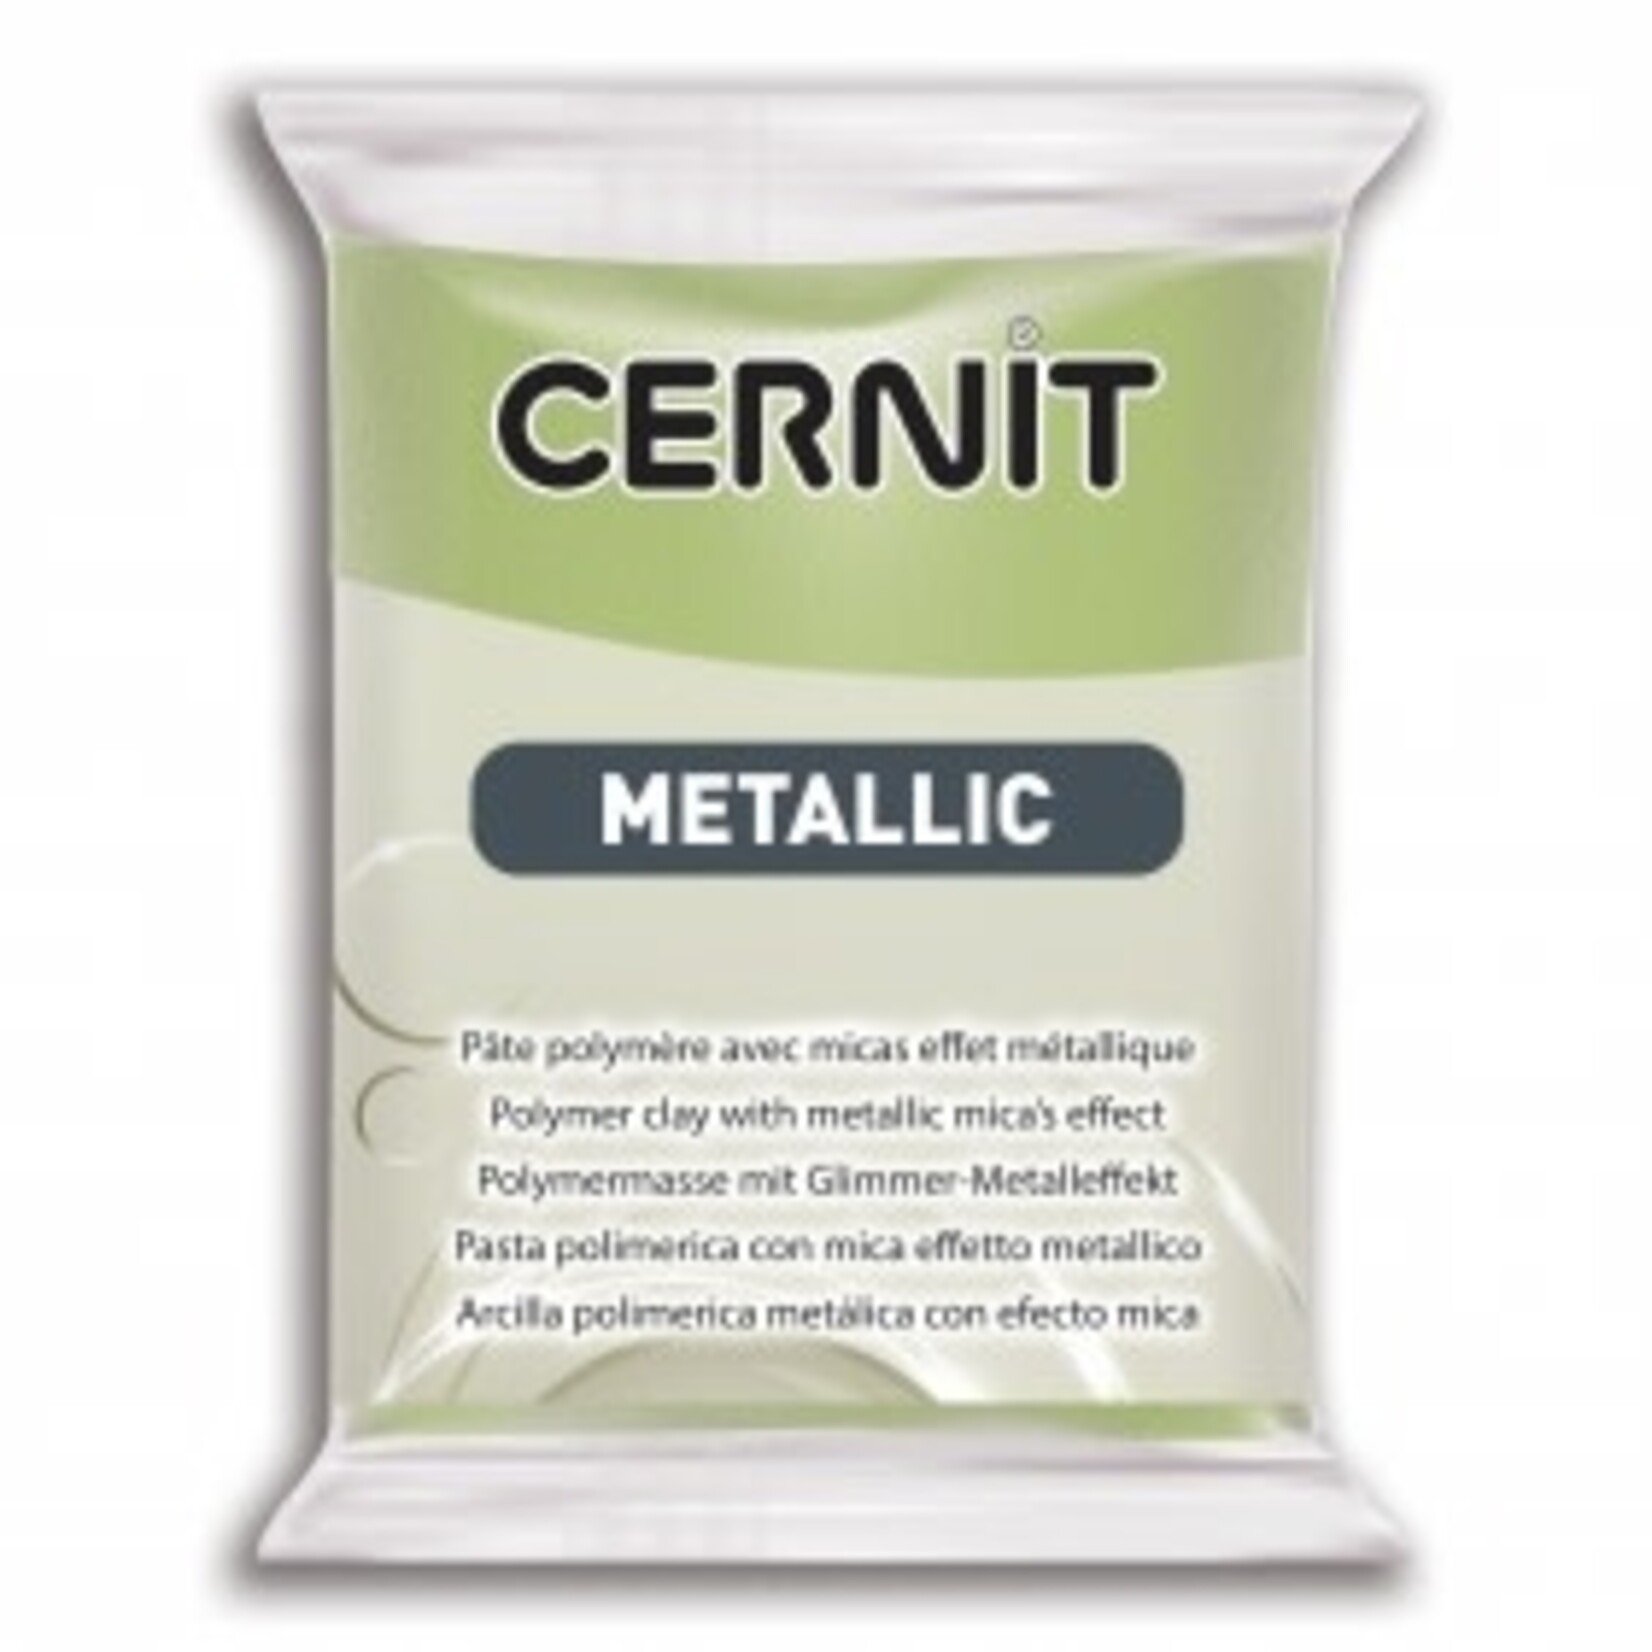 Cernit Cernit Metallic 56g Green Gold